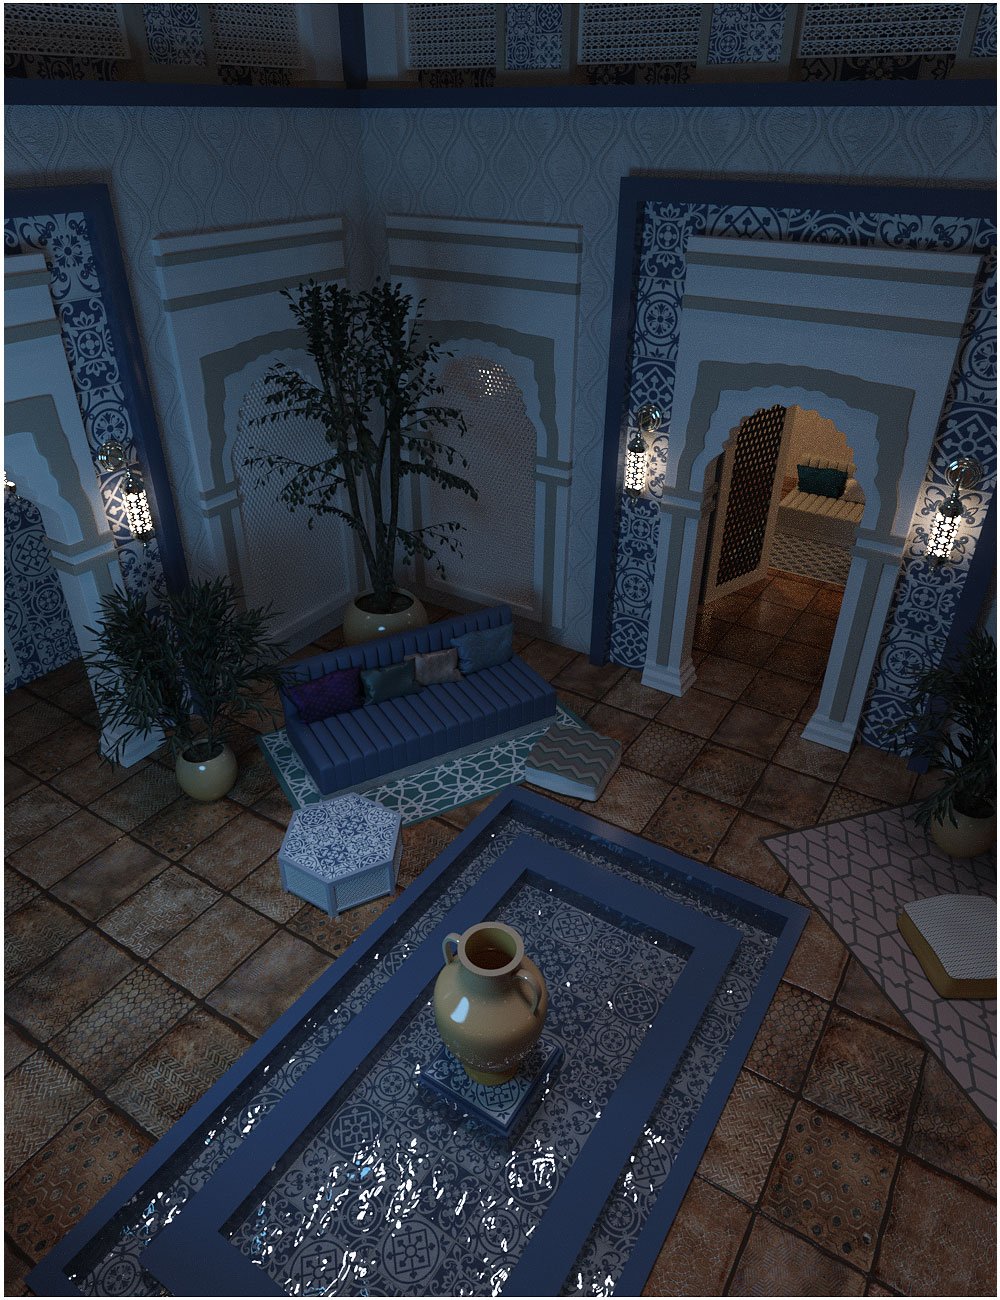 Moroccan Abode by: Belladzines, 3D Models by Daz 3D